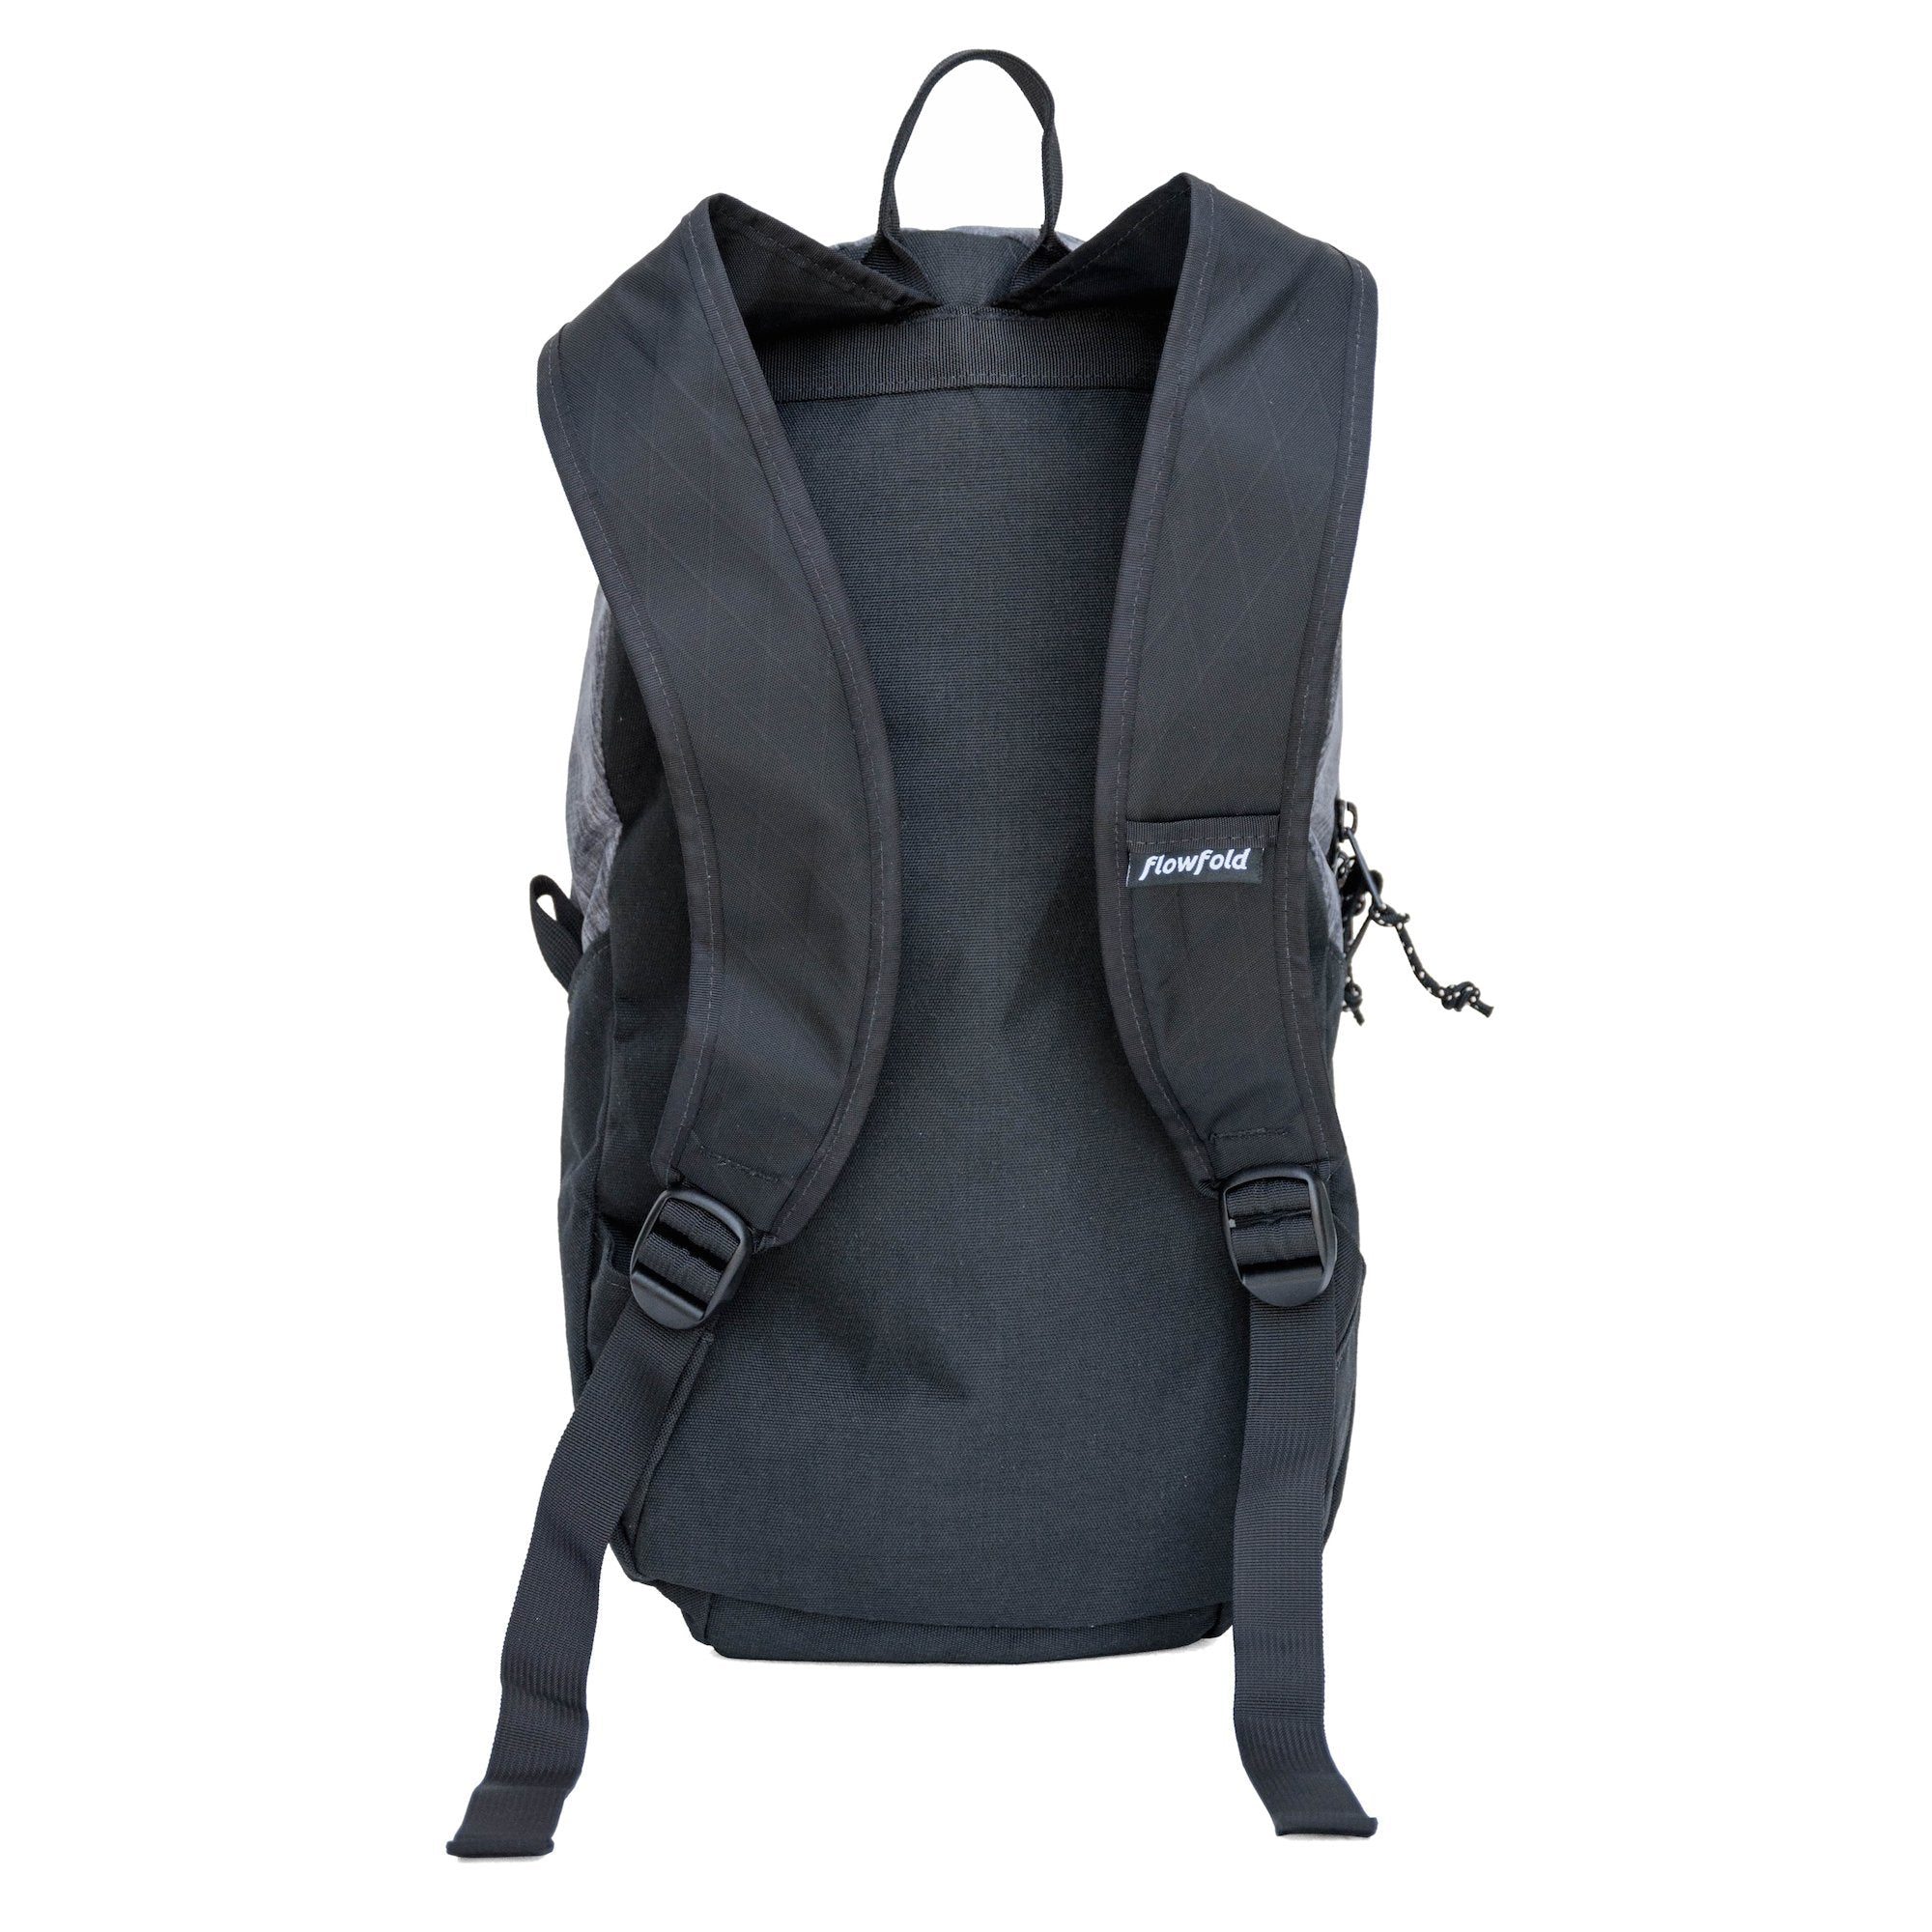 Flowfold | Mini Navy White and Orange Optimist Backpack, Backpacks, Flowfold, Defiance Outdoor Gear Co.